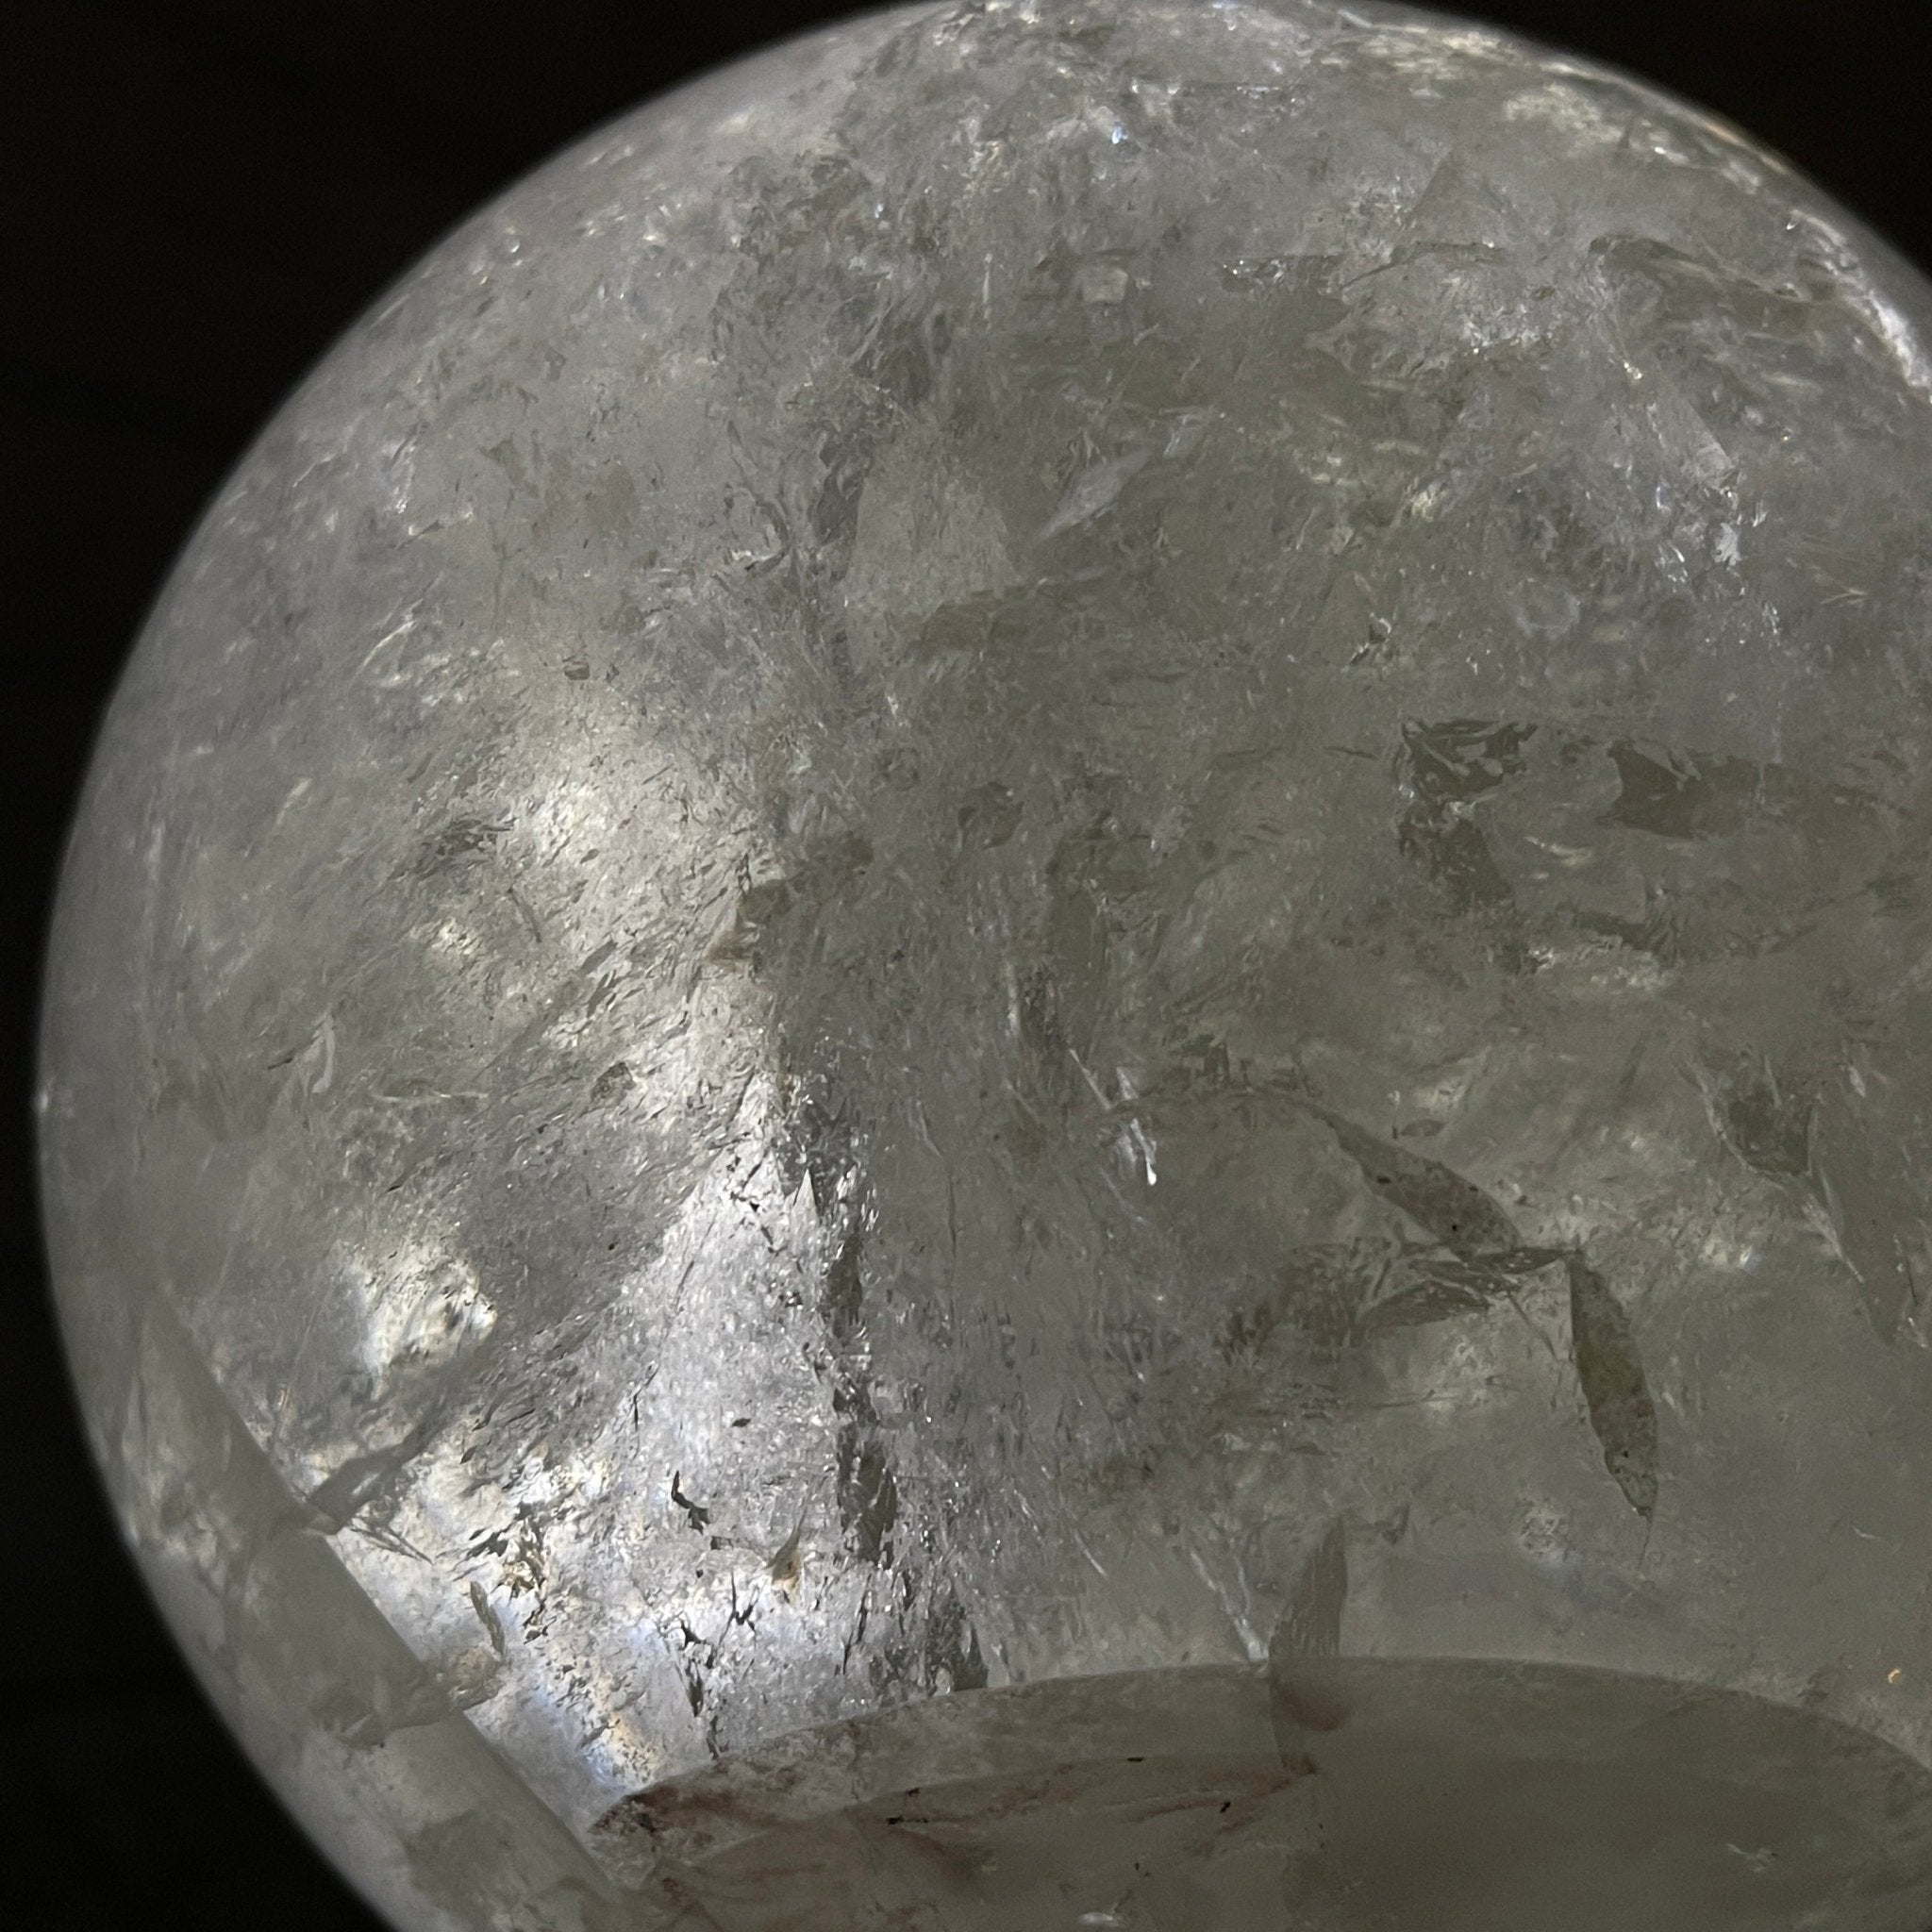 Clear Quartz Sphere on a Metal Base 10.3 lbs & 11" Tall Model #5631-0012 by Brazil Gems - Brazil GemsBrazil GemsClear Quartz Sphere on a Metal Base 10.3 lbs & 11" Tall Model #5631-0012 by Brazil GemsSpheres5631-0012